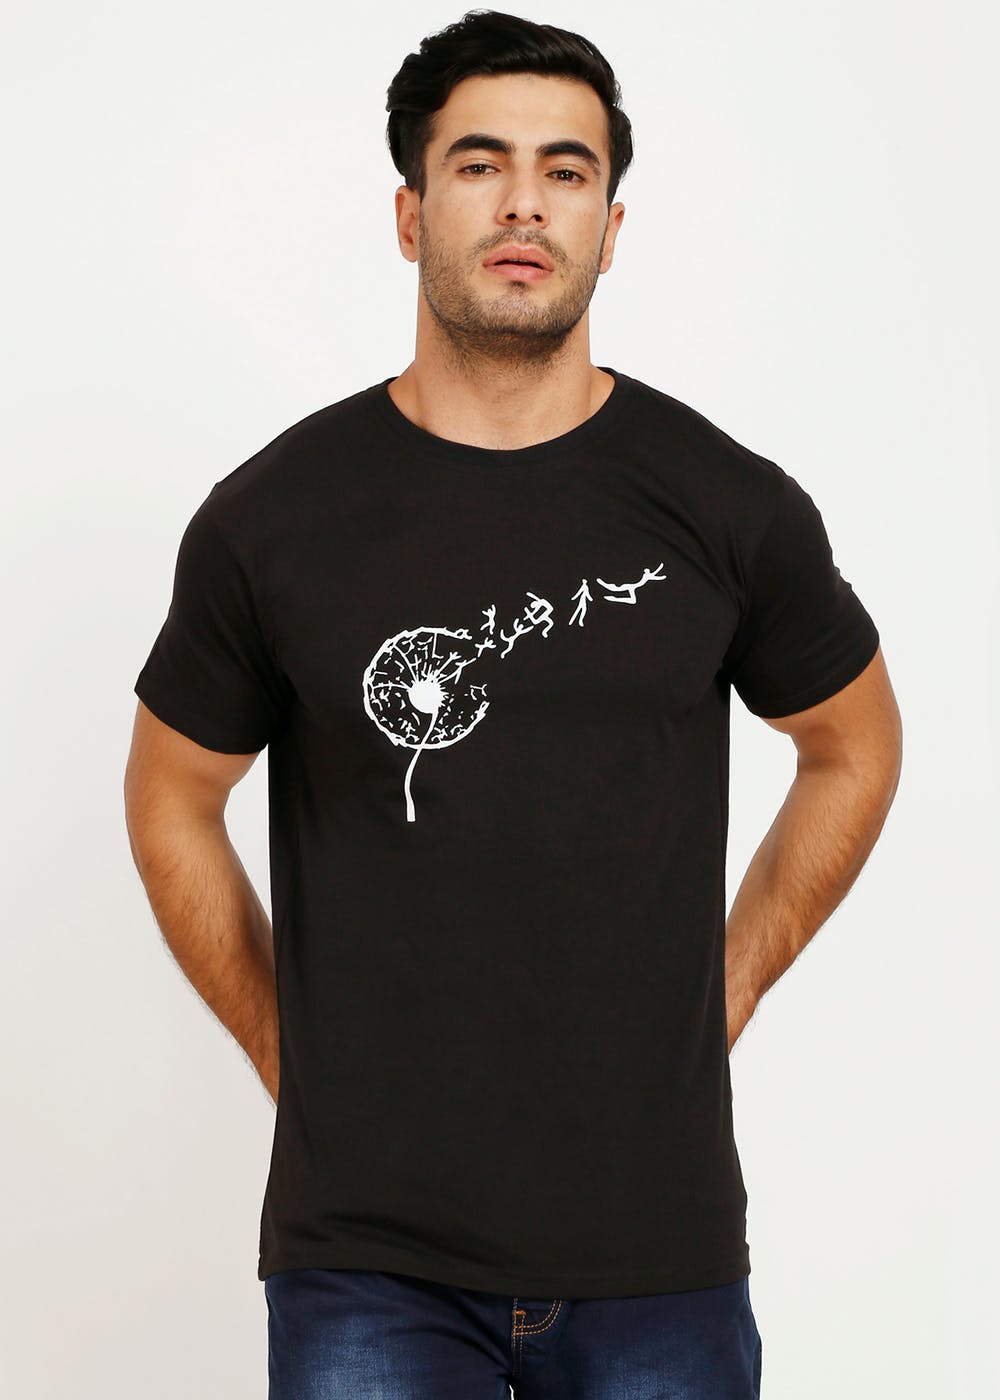 Dandelion Graphic Solid Crew Neck T-Shirt - Black